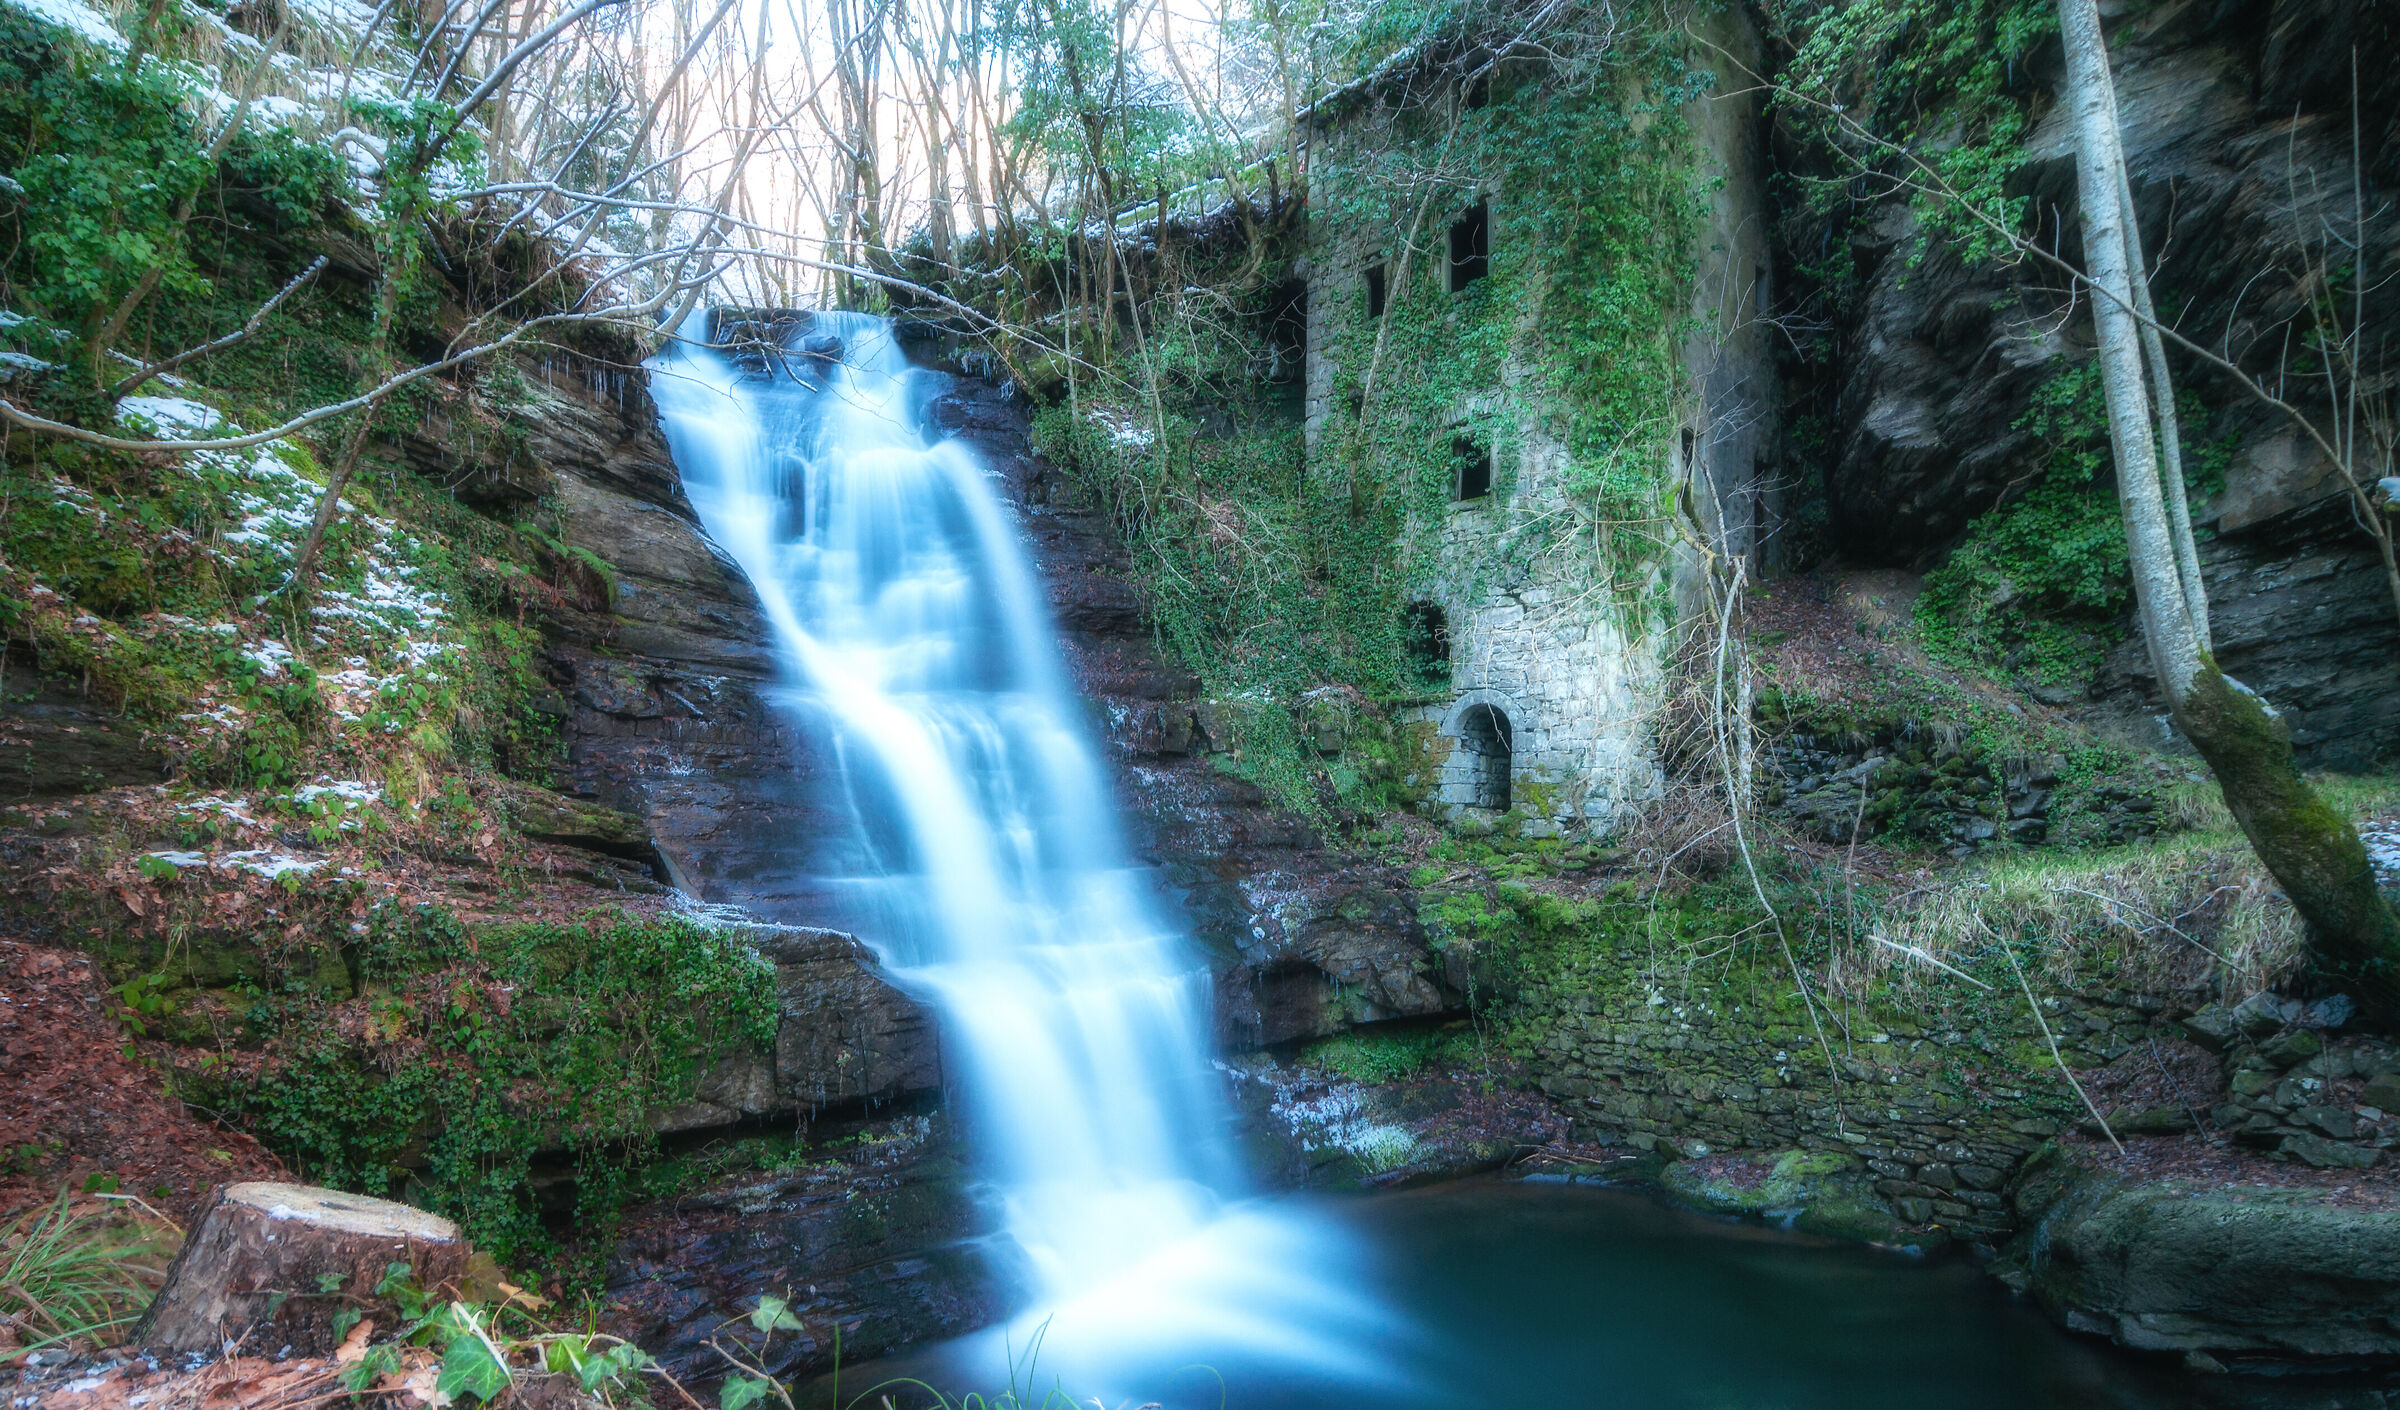 Molino di Nazareno and its waterfall...